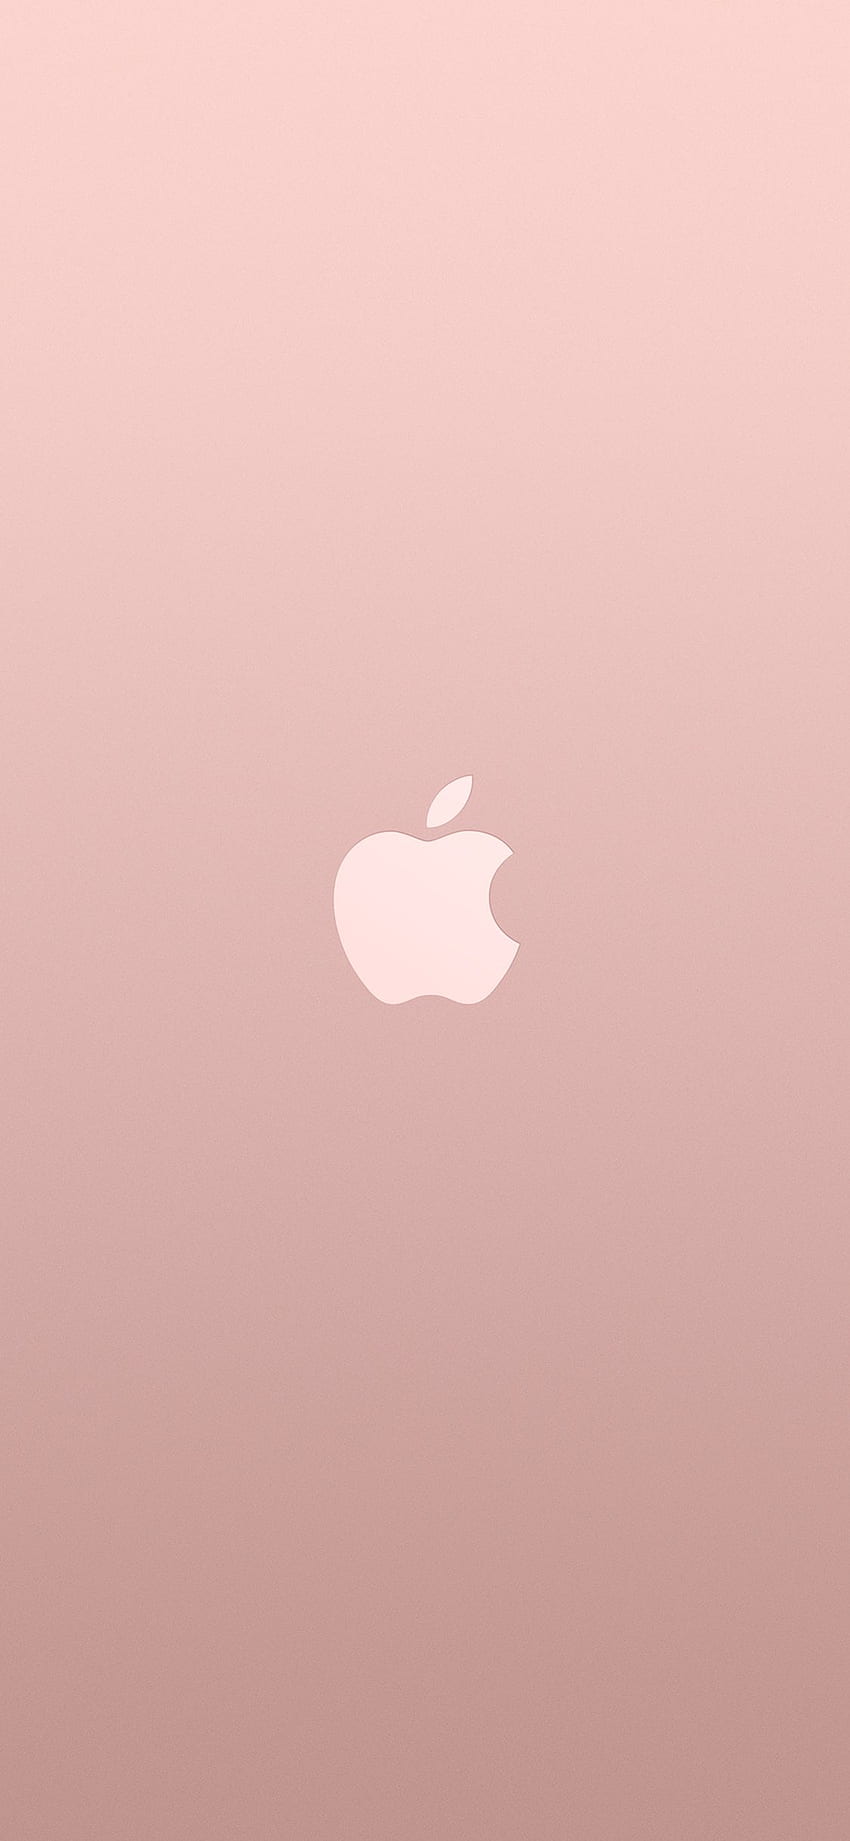 iPhone X . logo apple pink rose gold white minimal illustration art HD phone wallpaper